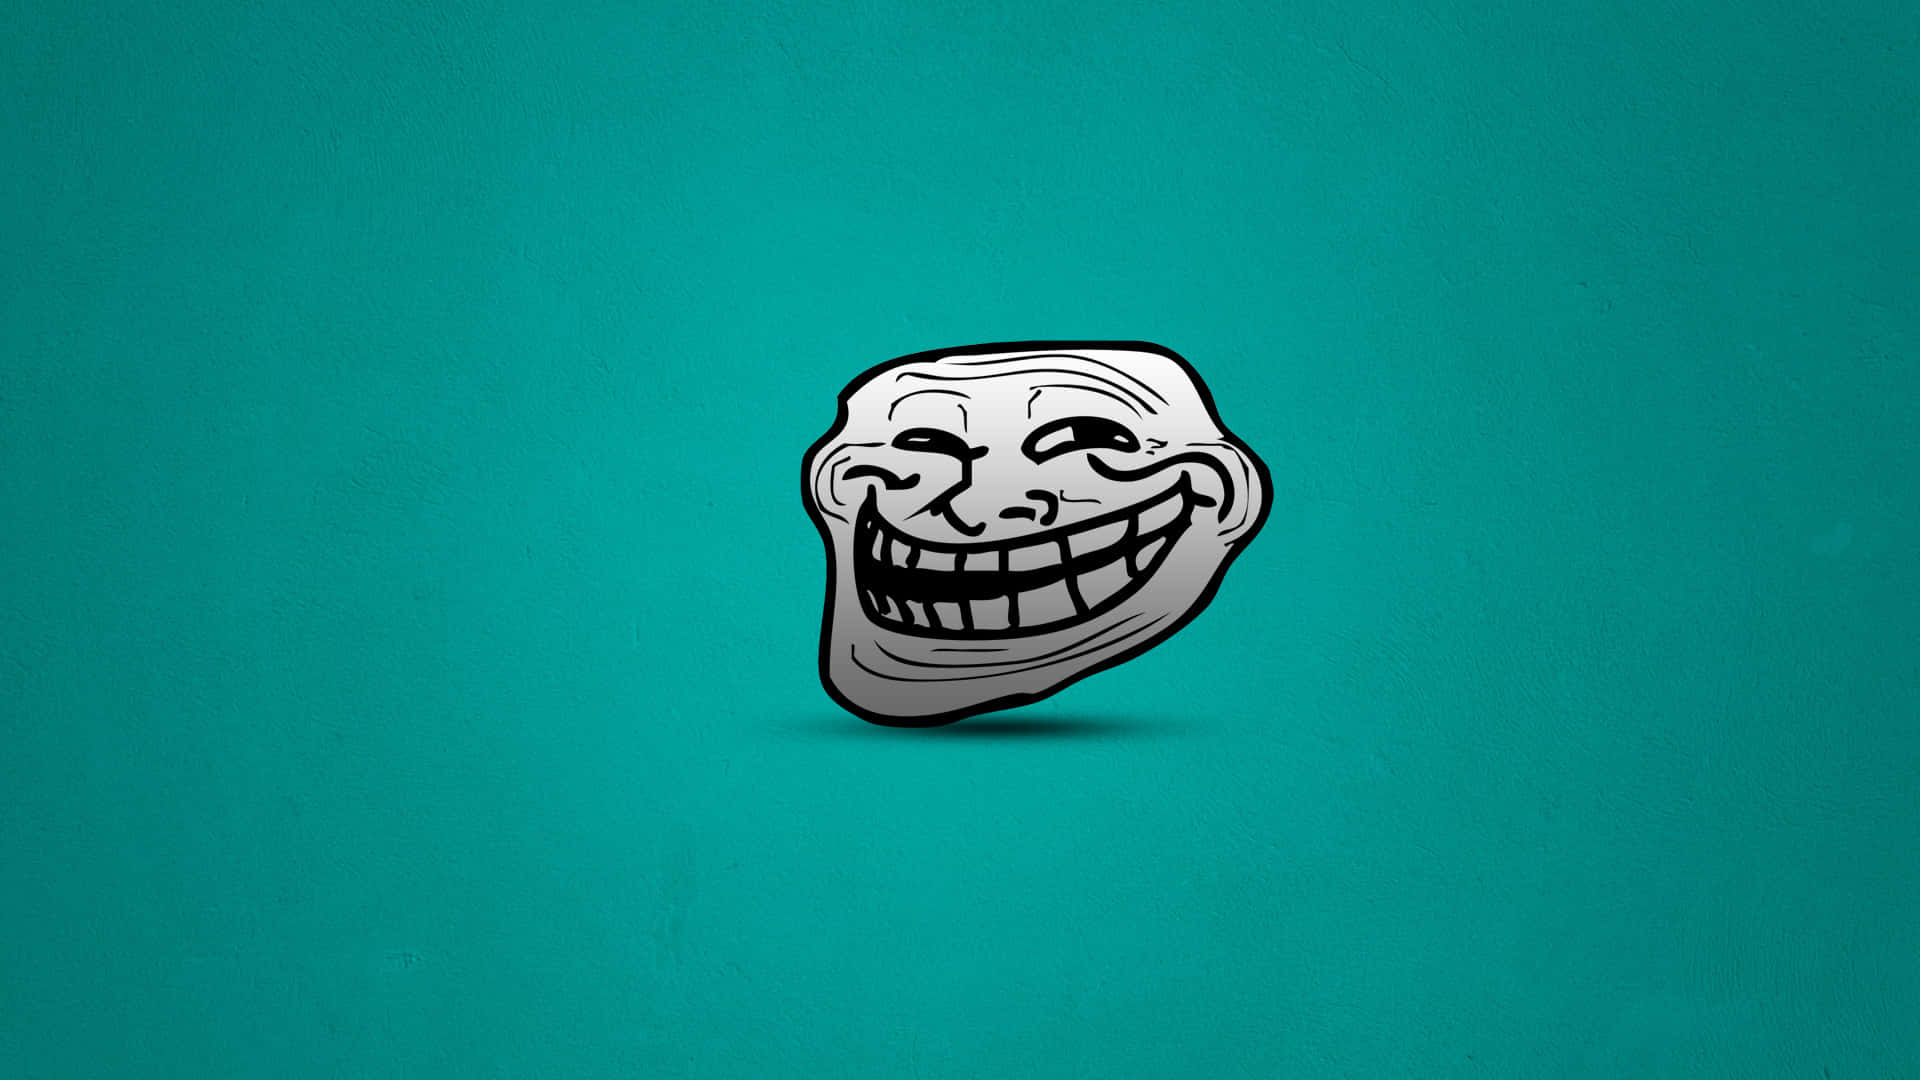 Laughing Troll Face Meme Laptop Wallpaper